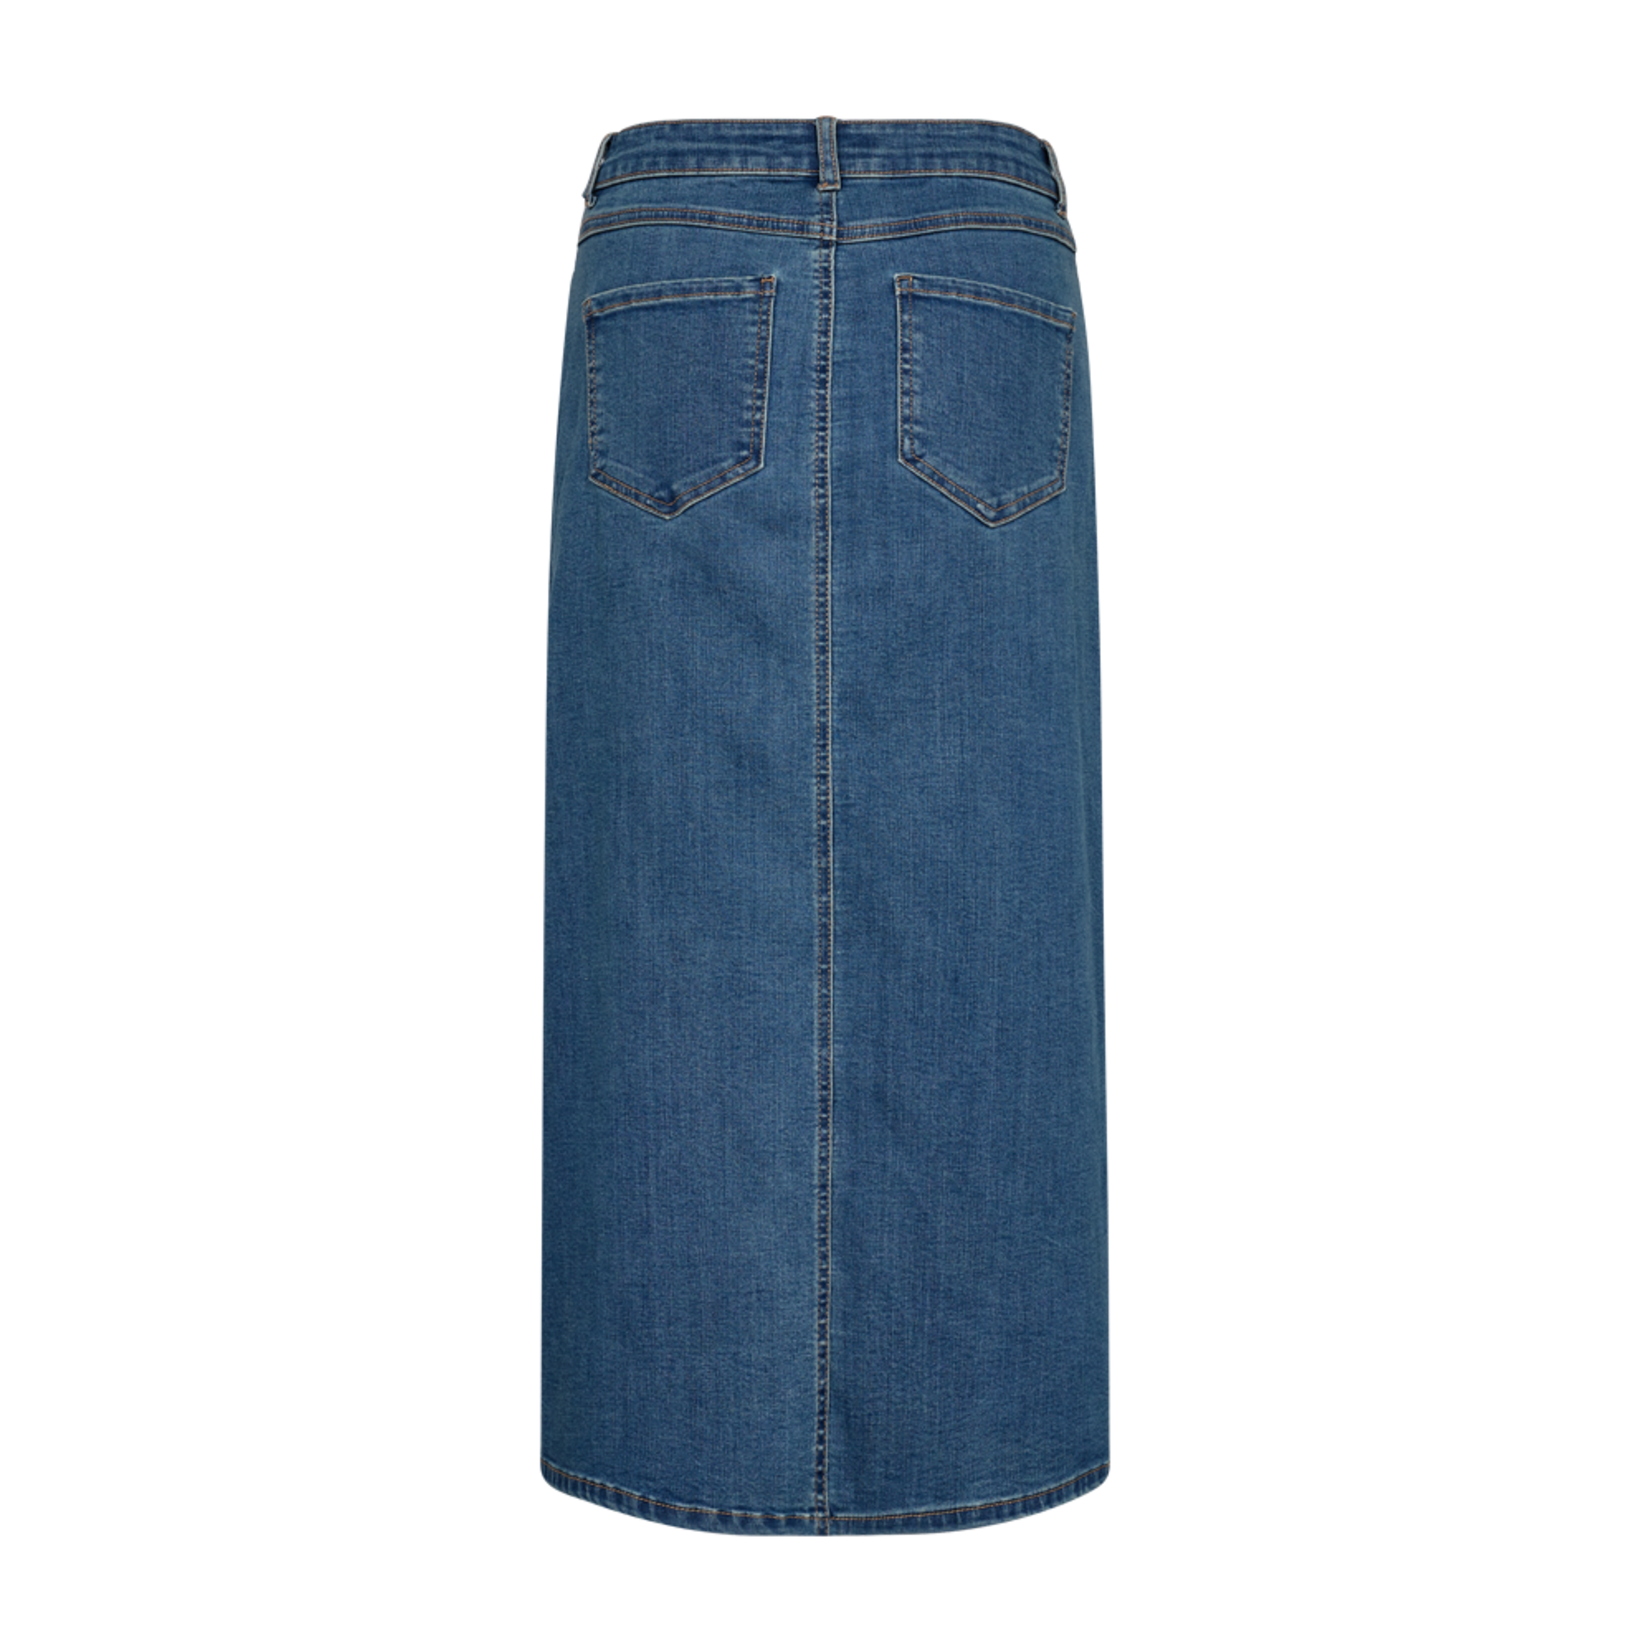 Free/quent Harlan skirt, vintage jeansrok